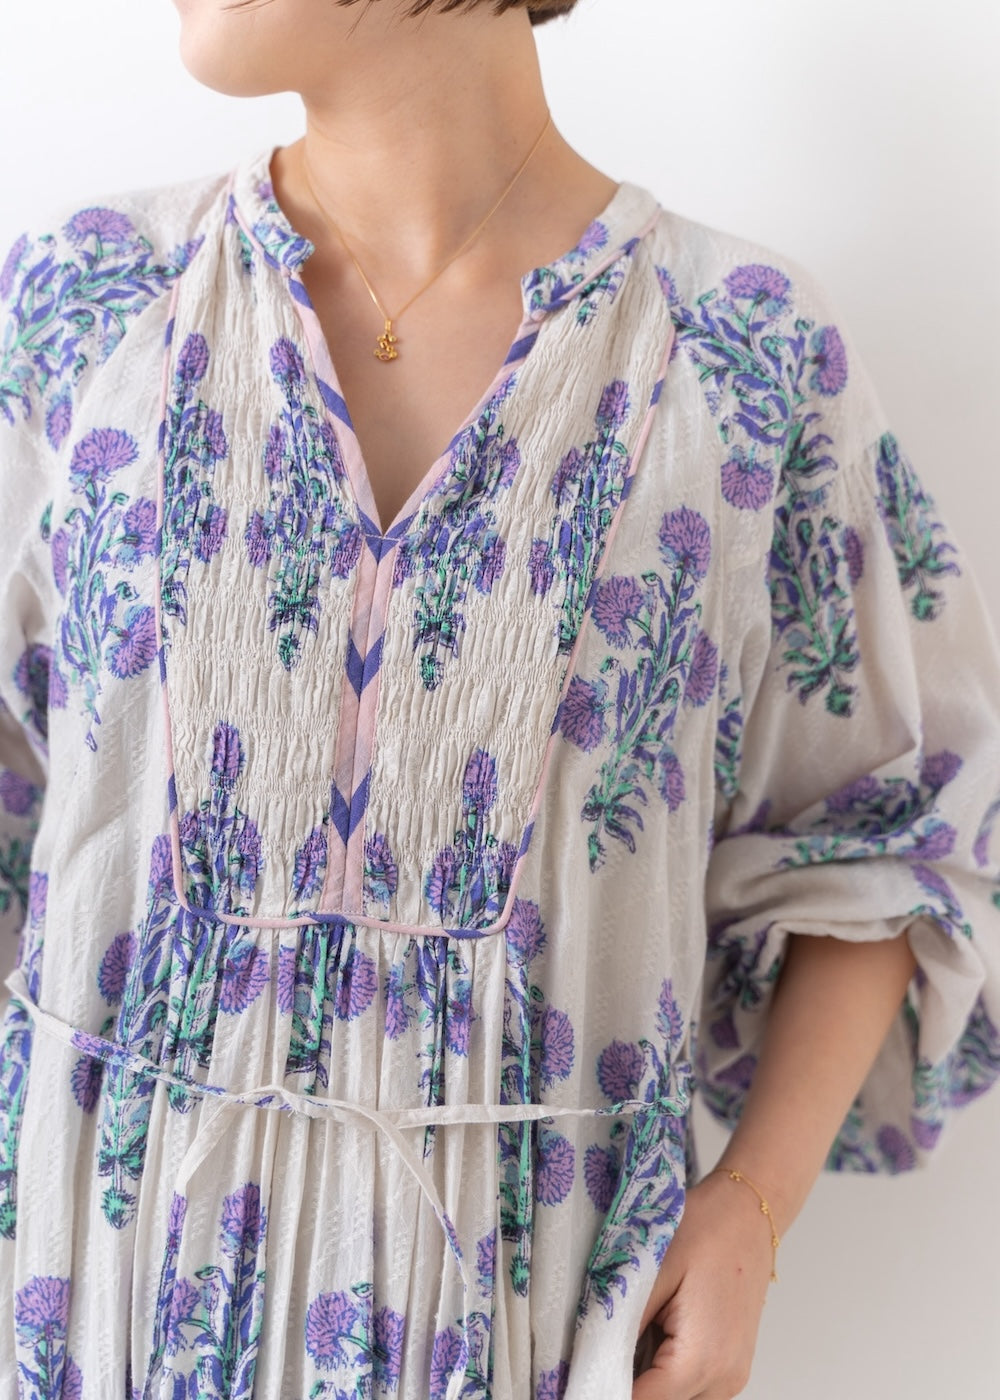 【Ecru予約受付中】Cotton Jacquard Marigold Print Shirring Dress